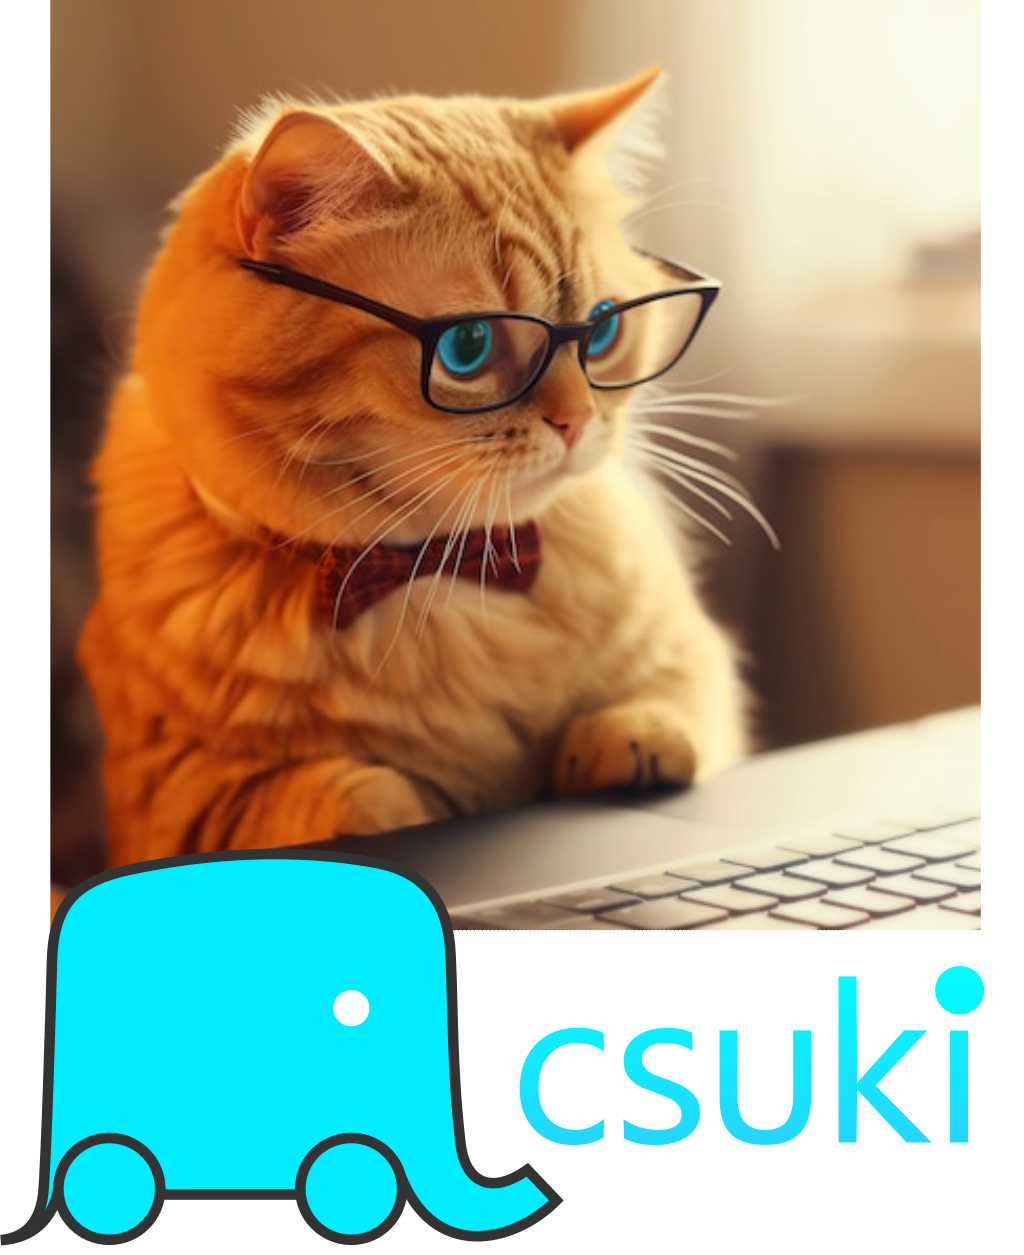 csuki_app_link